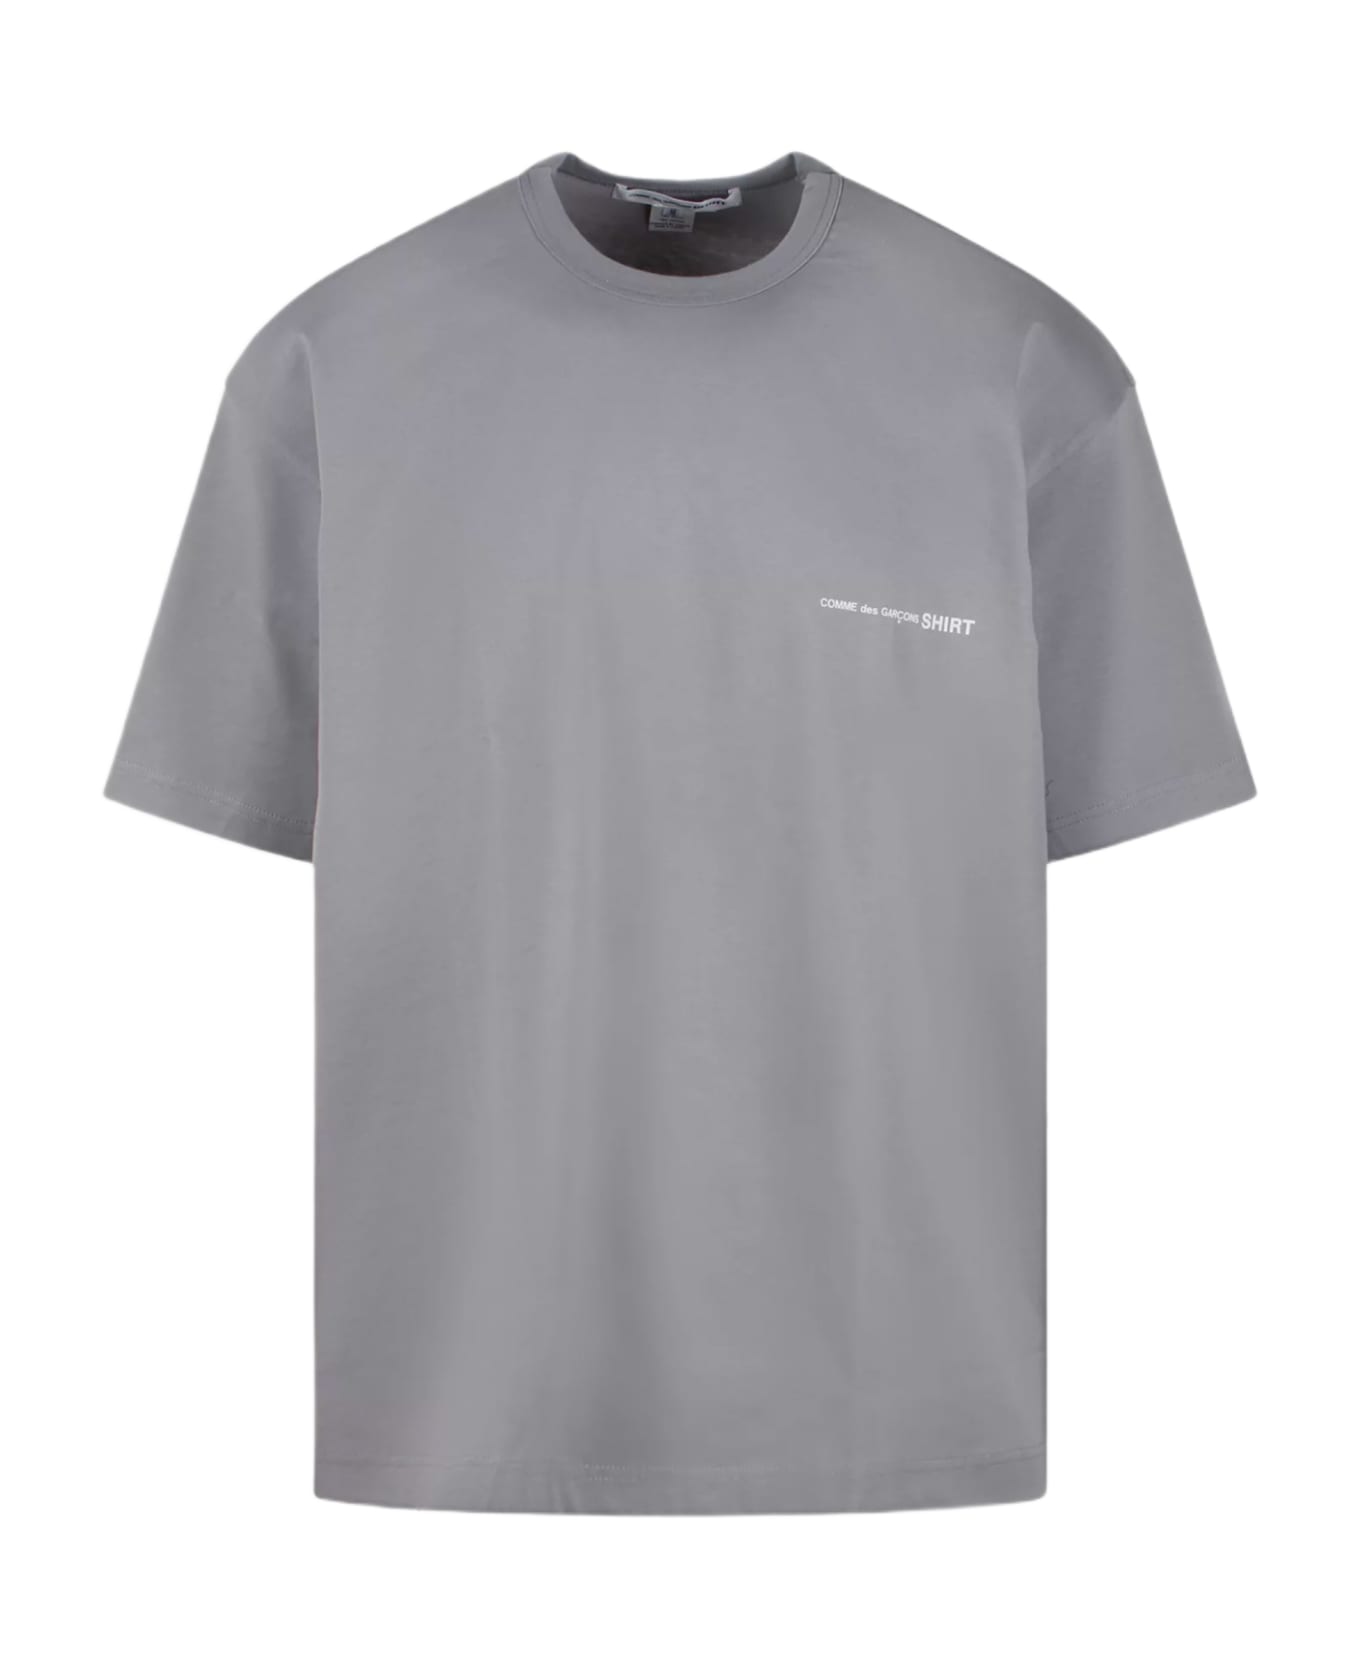 Comme des Garçons Shirt Mens T-shirt Knit Grey cotton oversize t-shirt with chest logo - Grigio